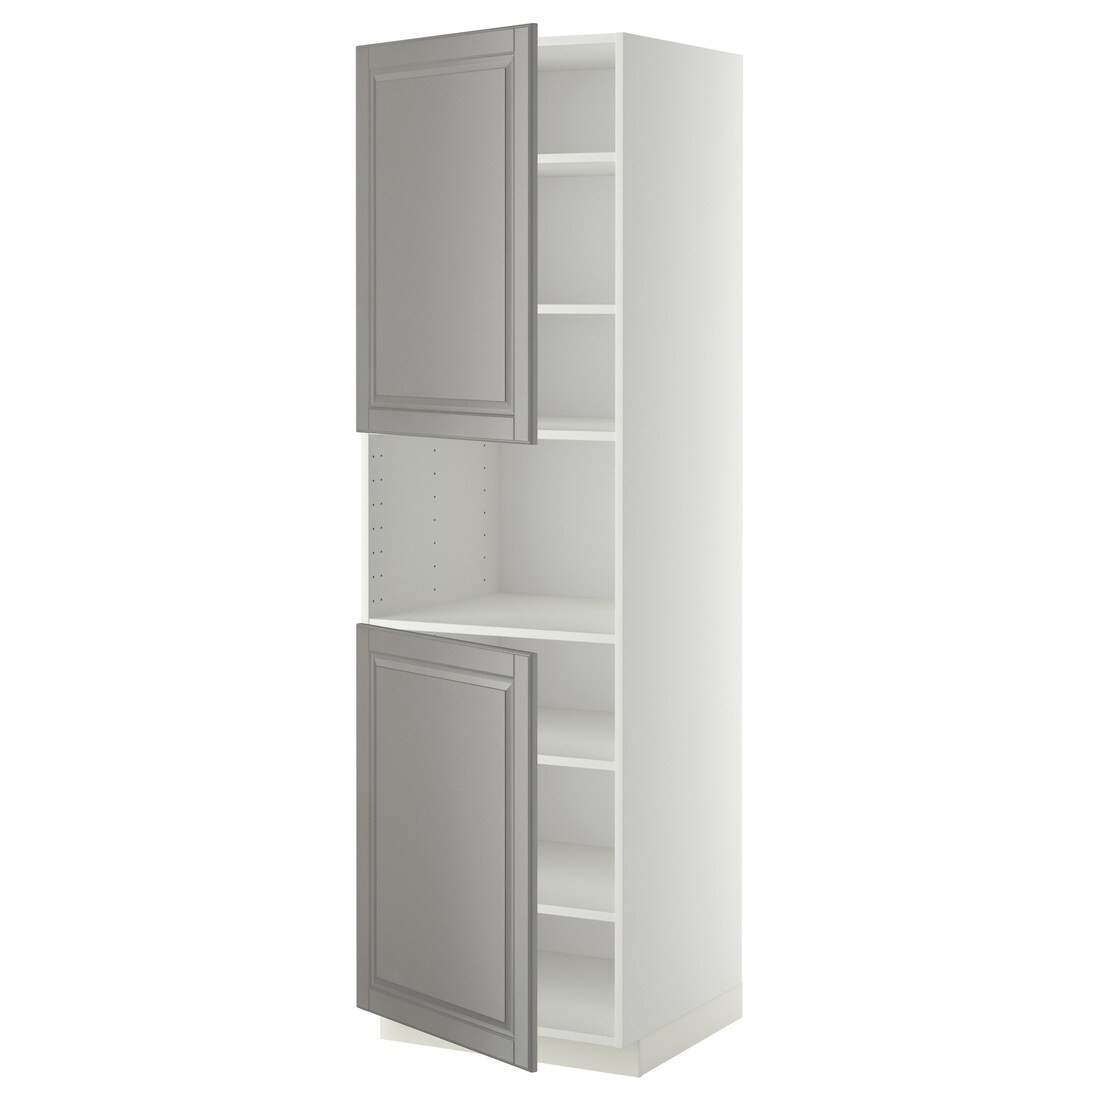 IKEA METOD МЕТОД Высокий шкаф для СВЧ / 2 дверцы / полки, белый / Bodbyn серый, 60x60x200 см 99458009 | 994.580.09